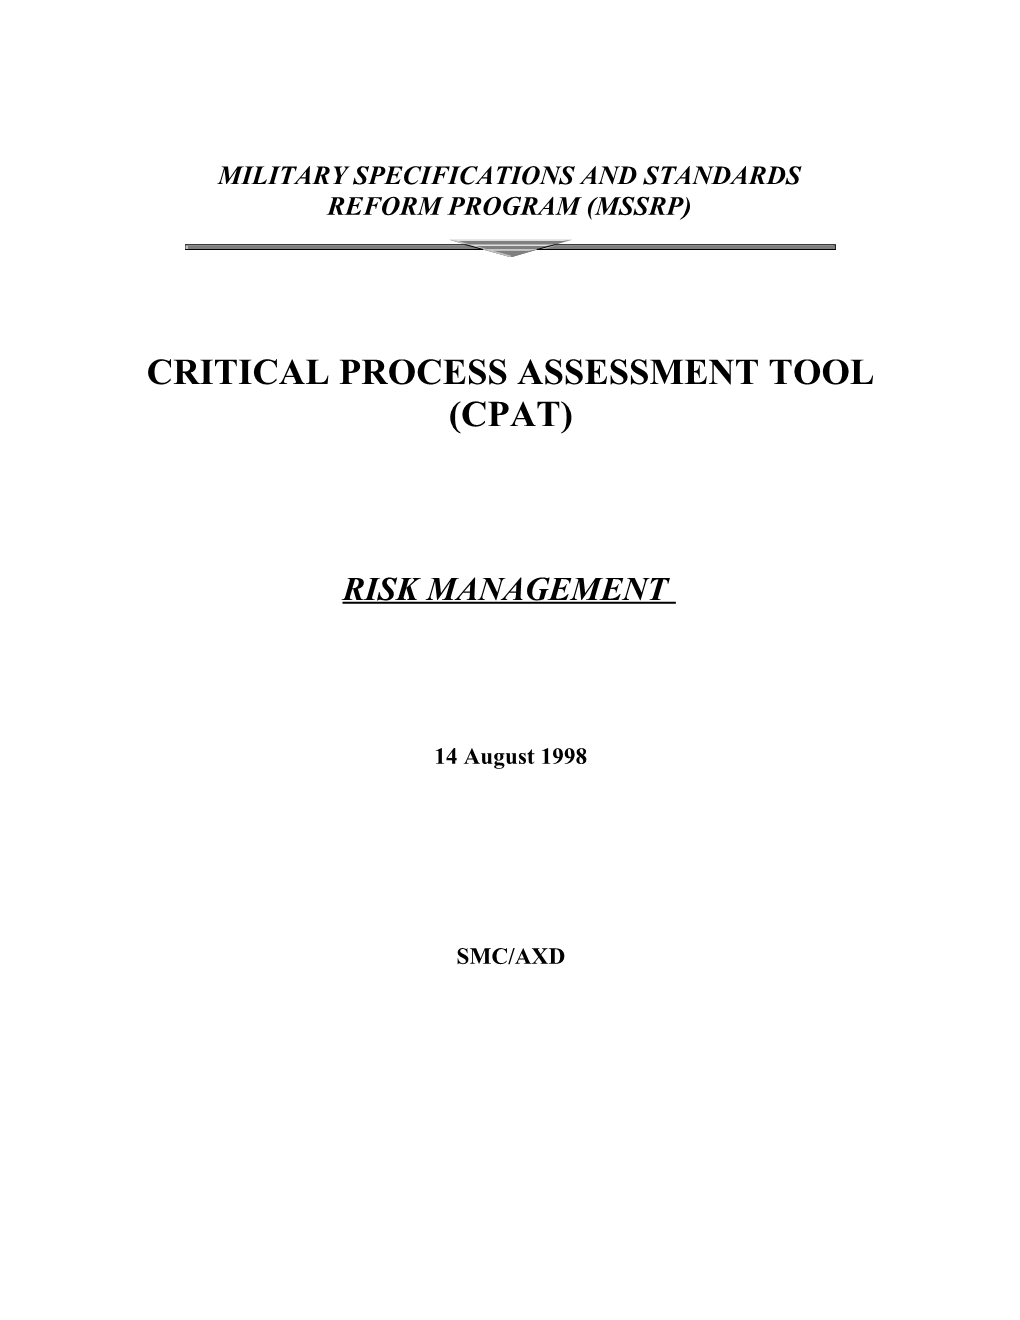 Risk Management CPAT, Version 2.0